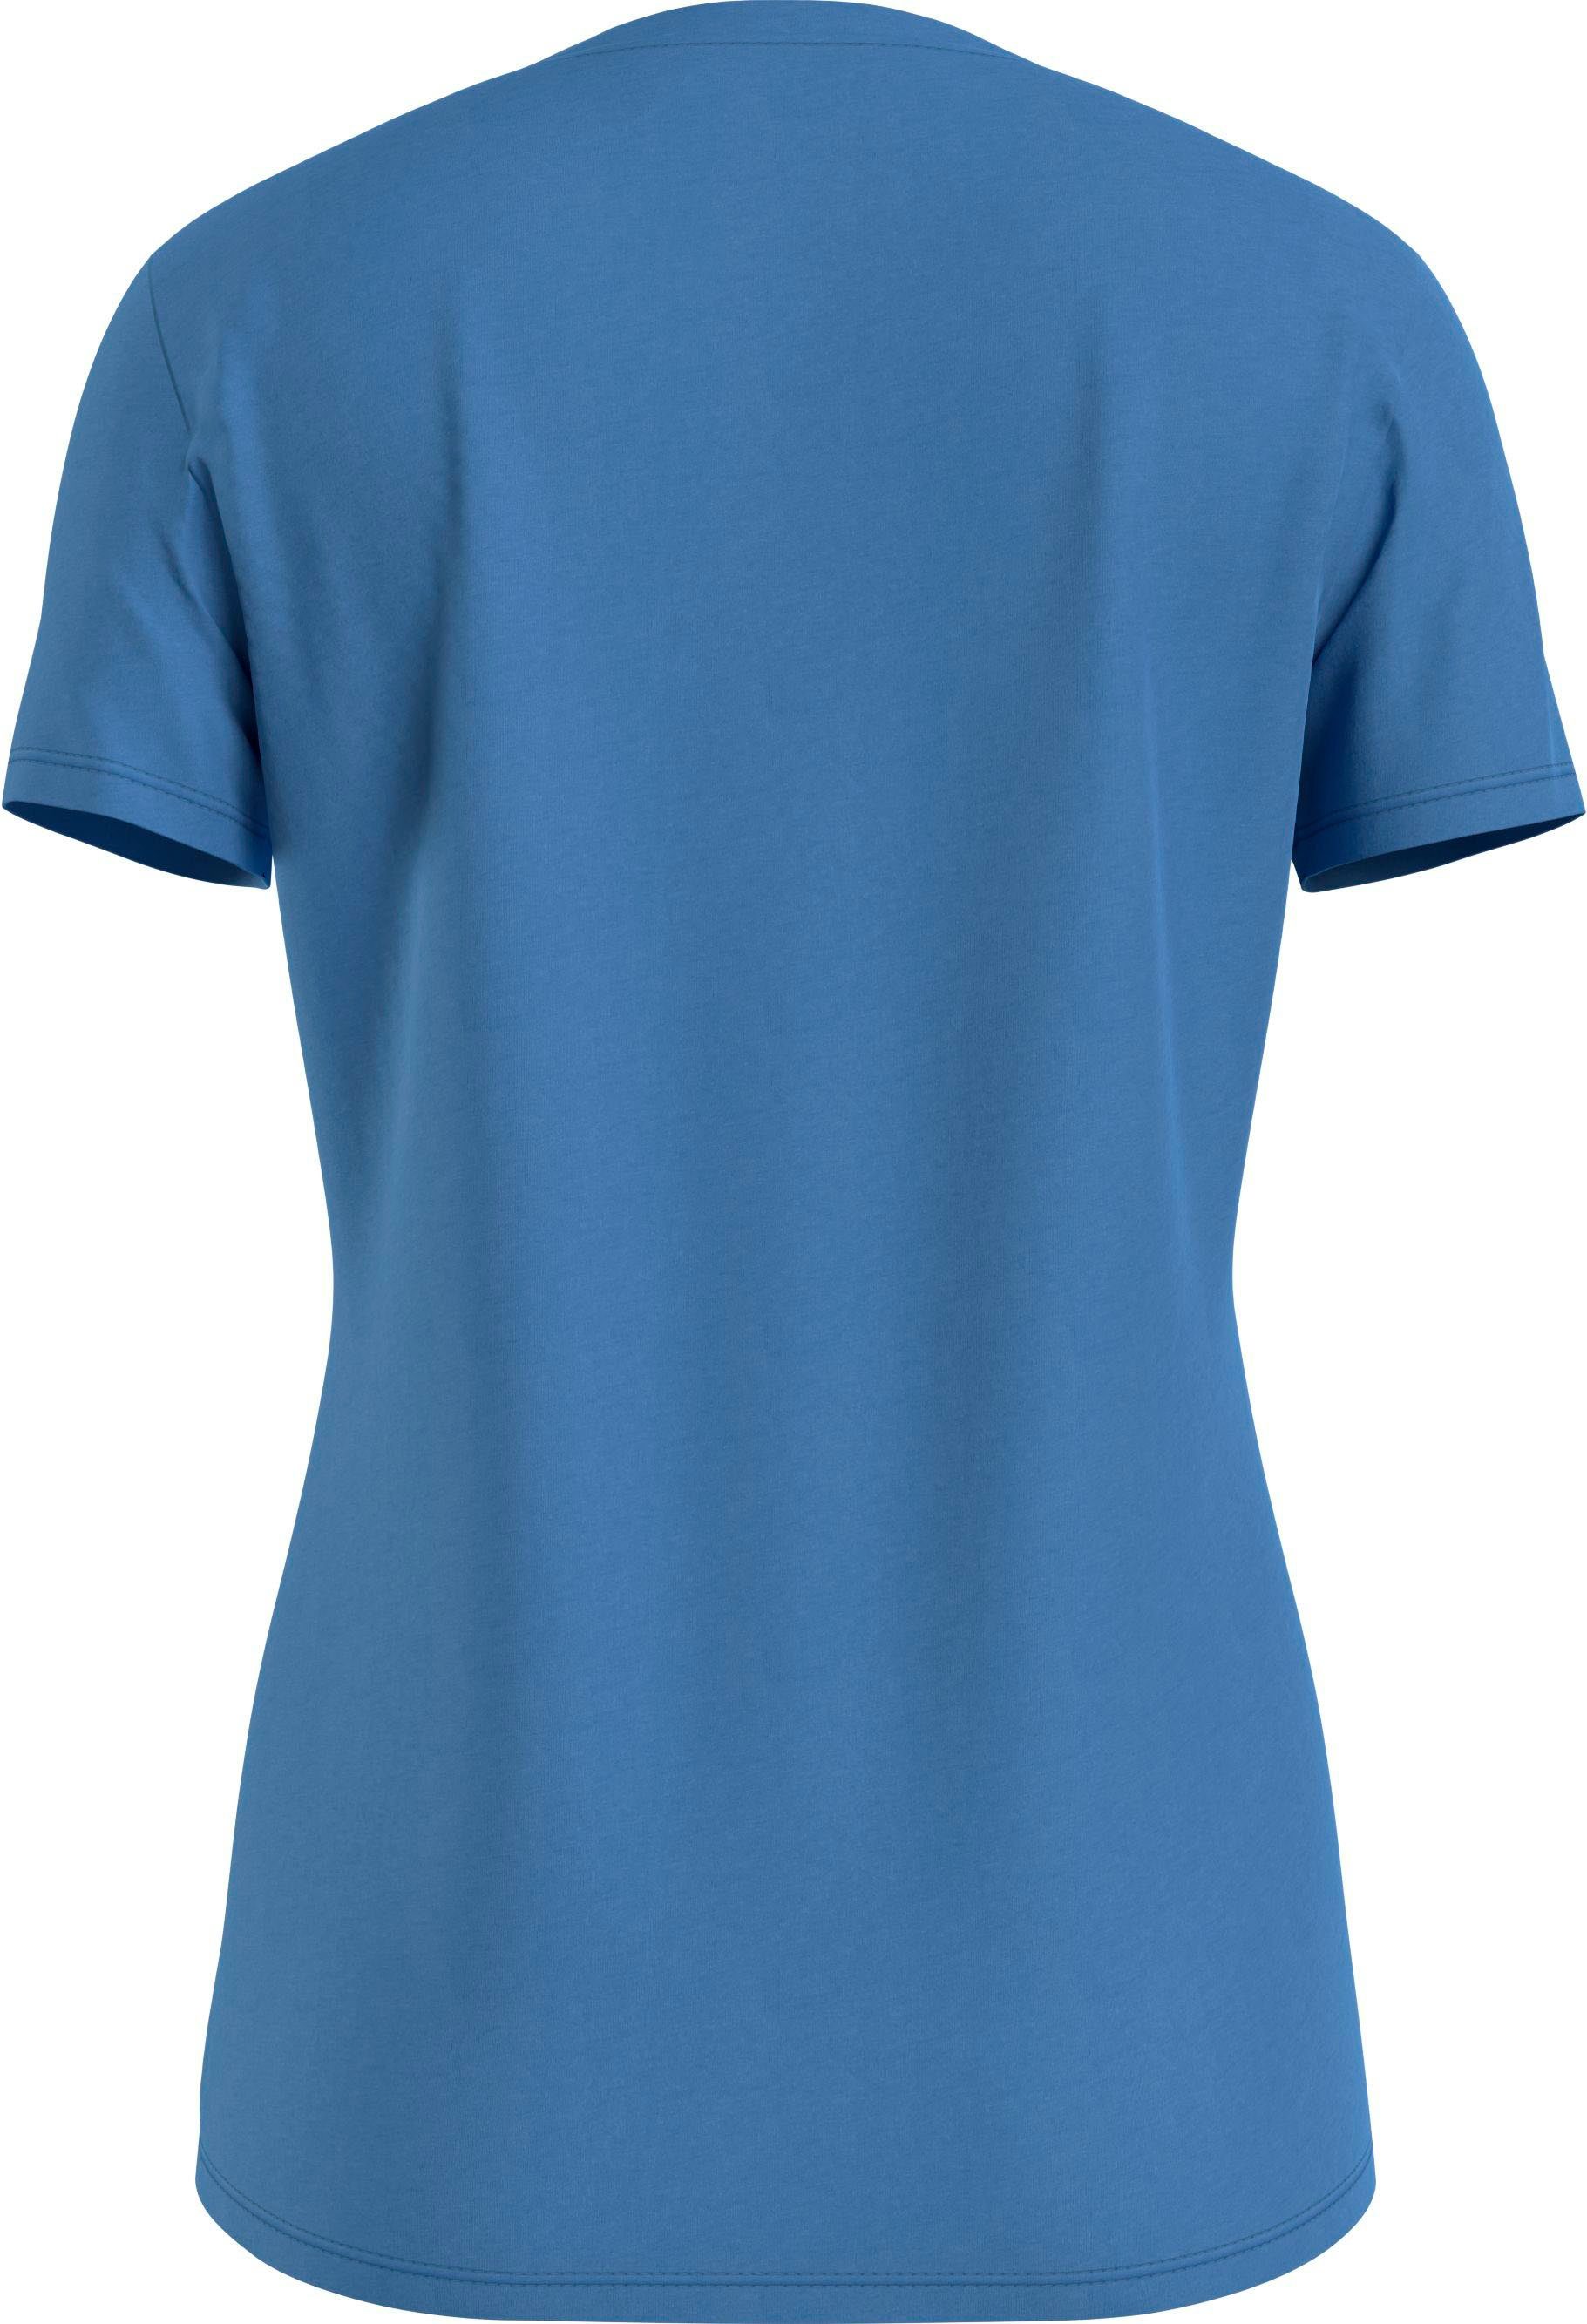 Markenlabel Hilfiger NEW NECK TEE Sky-Cloud Tommy Tommy CREW T-Shirt mit Hilfiger